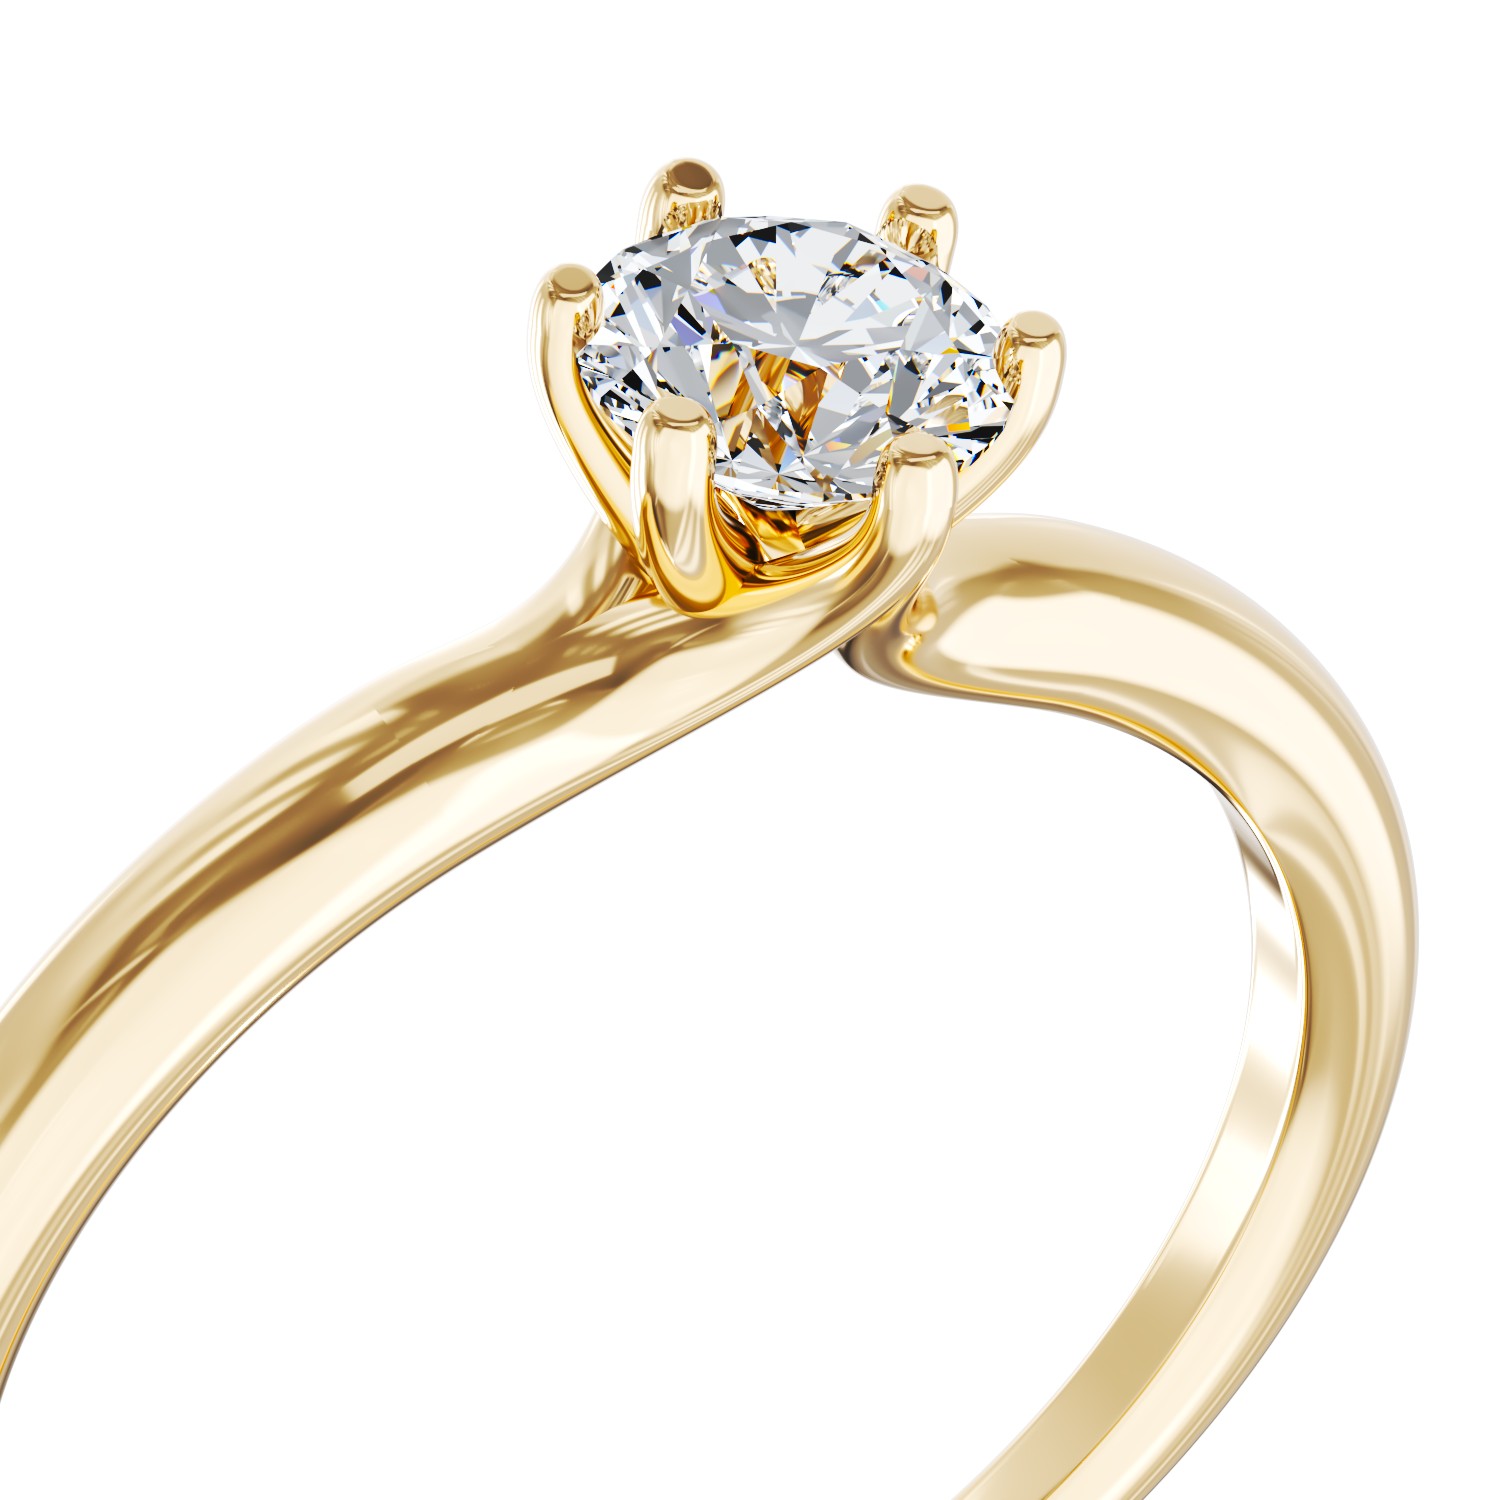 Inel de logodna din aur galben de 18K cu un diamant solitaire de 0.31ct